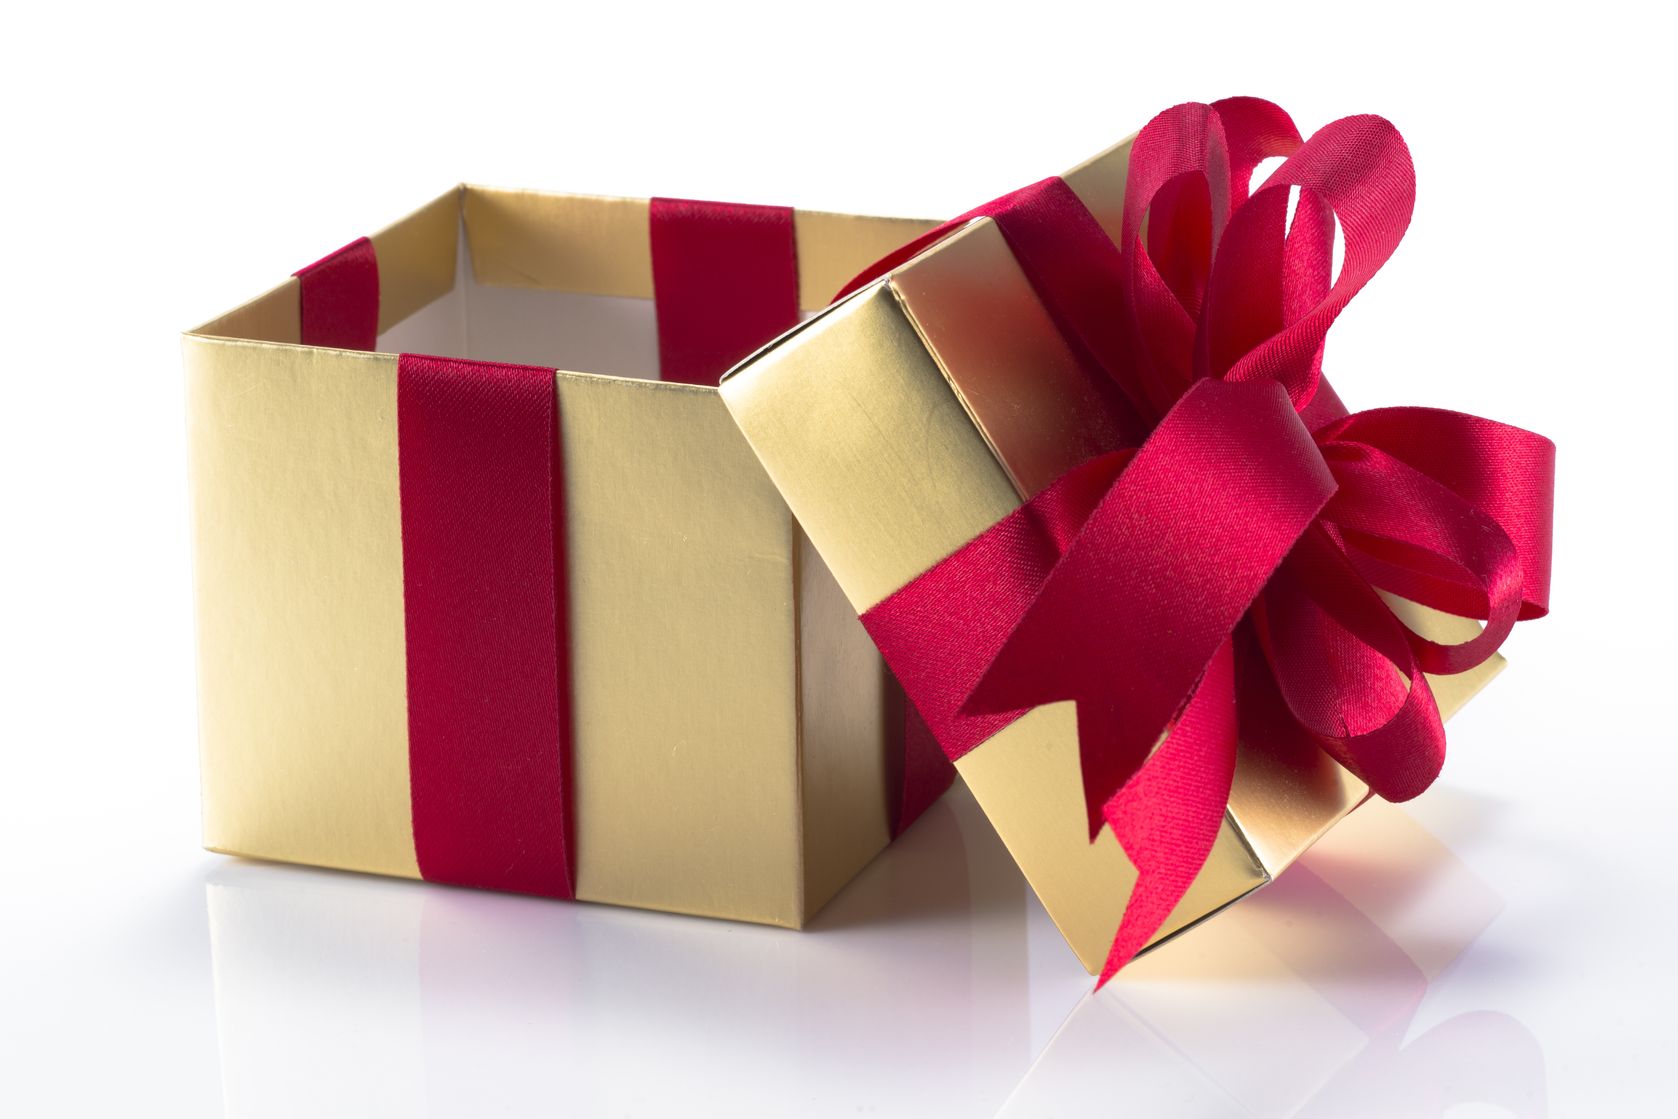 tmobile uncarrier unwrapped verizon promotion gift box 01 123rf 21074040 ml